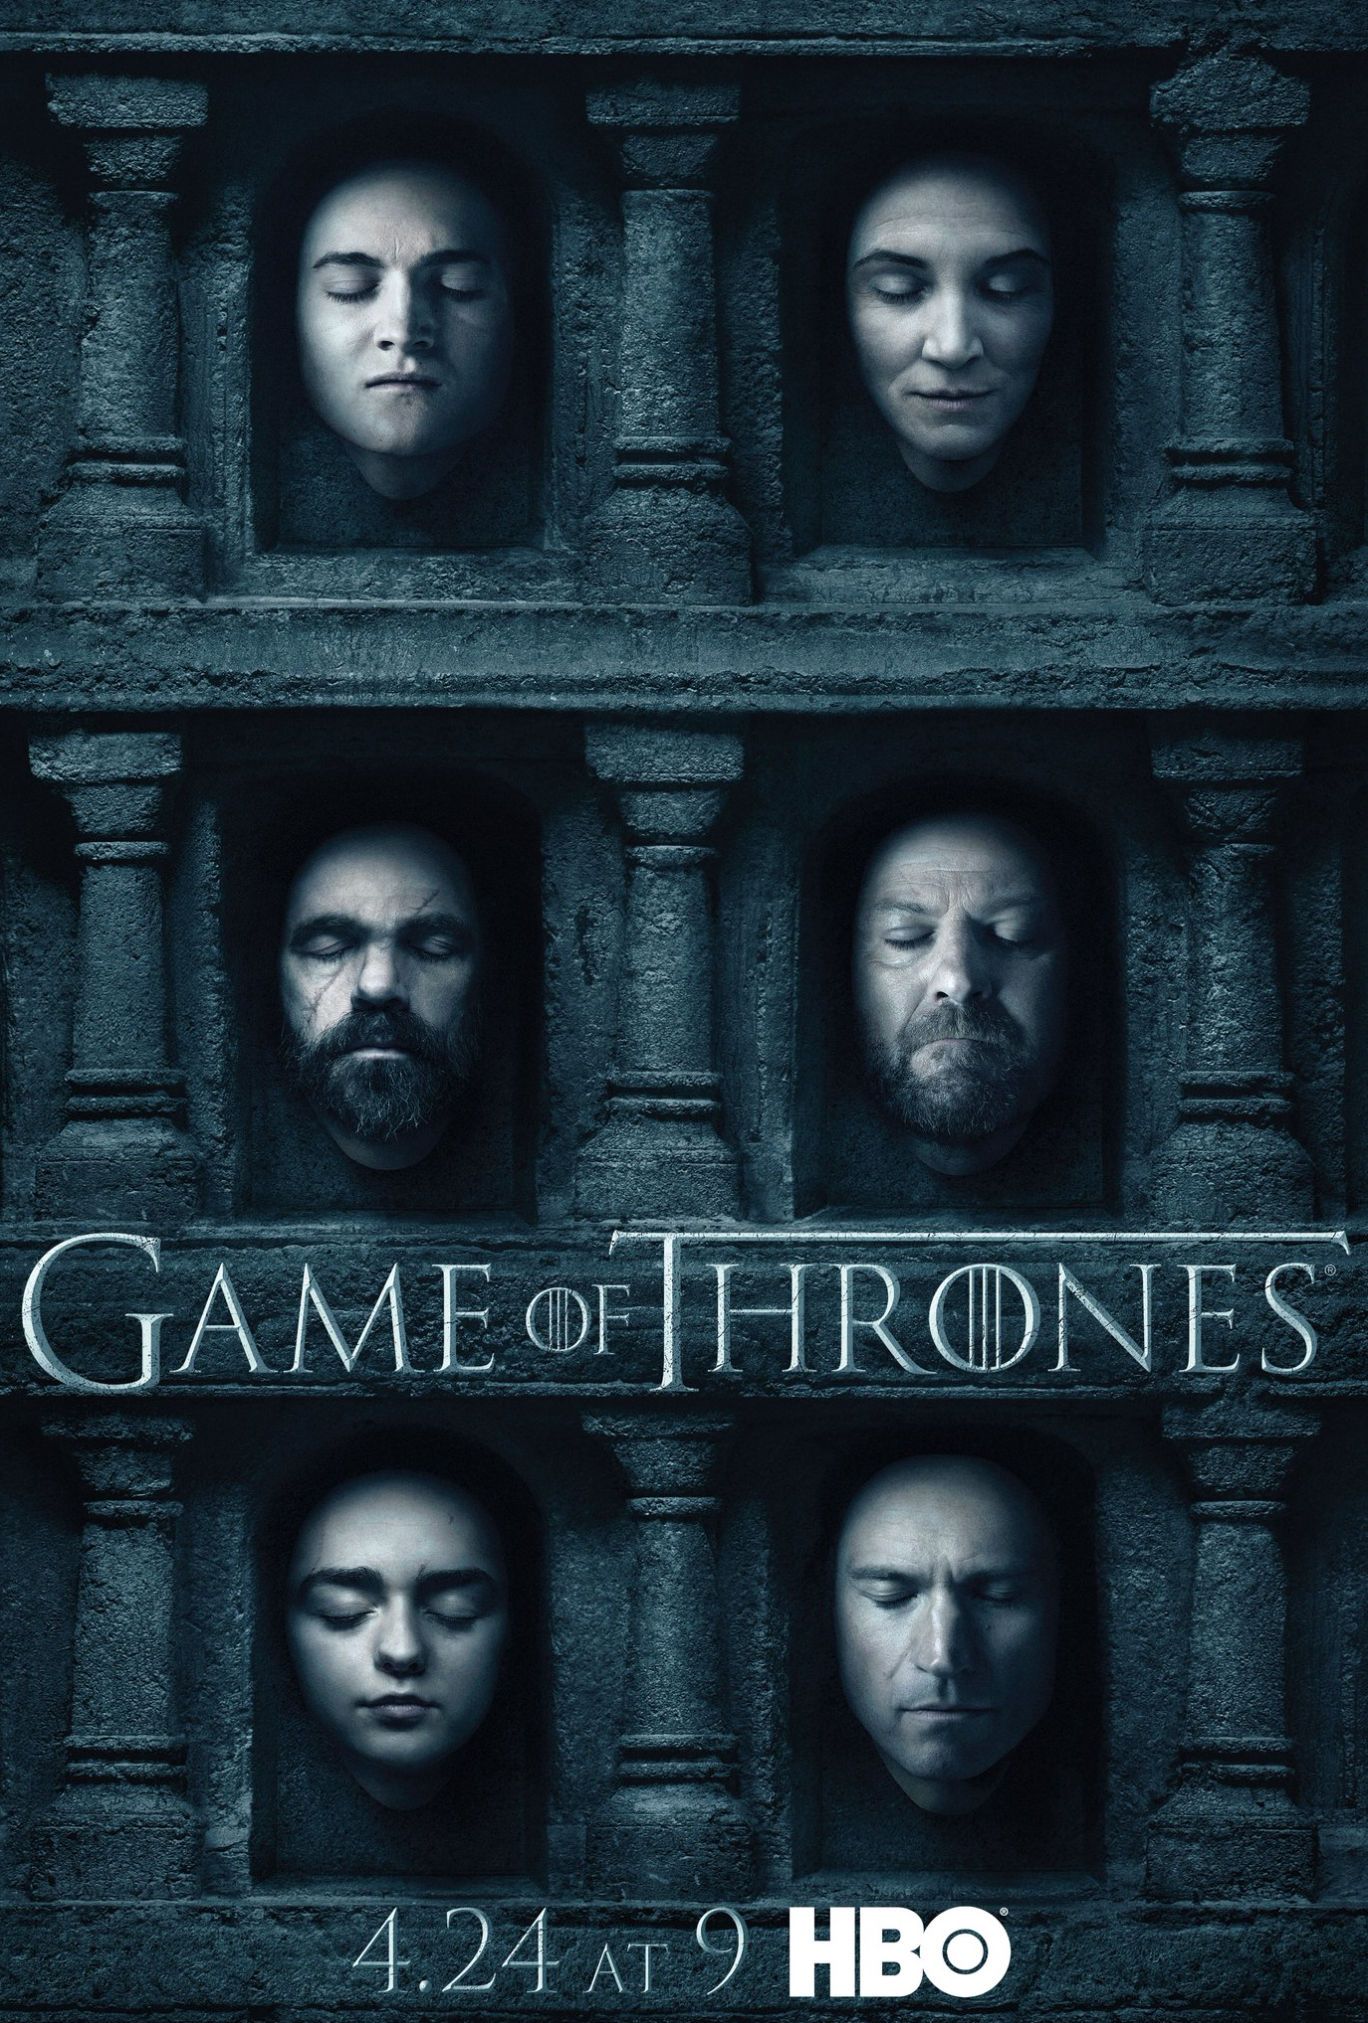 Game of Thrones season 6 - Faces Poster